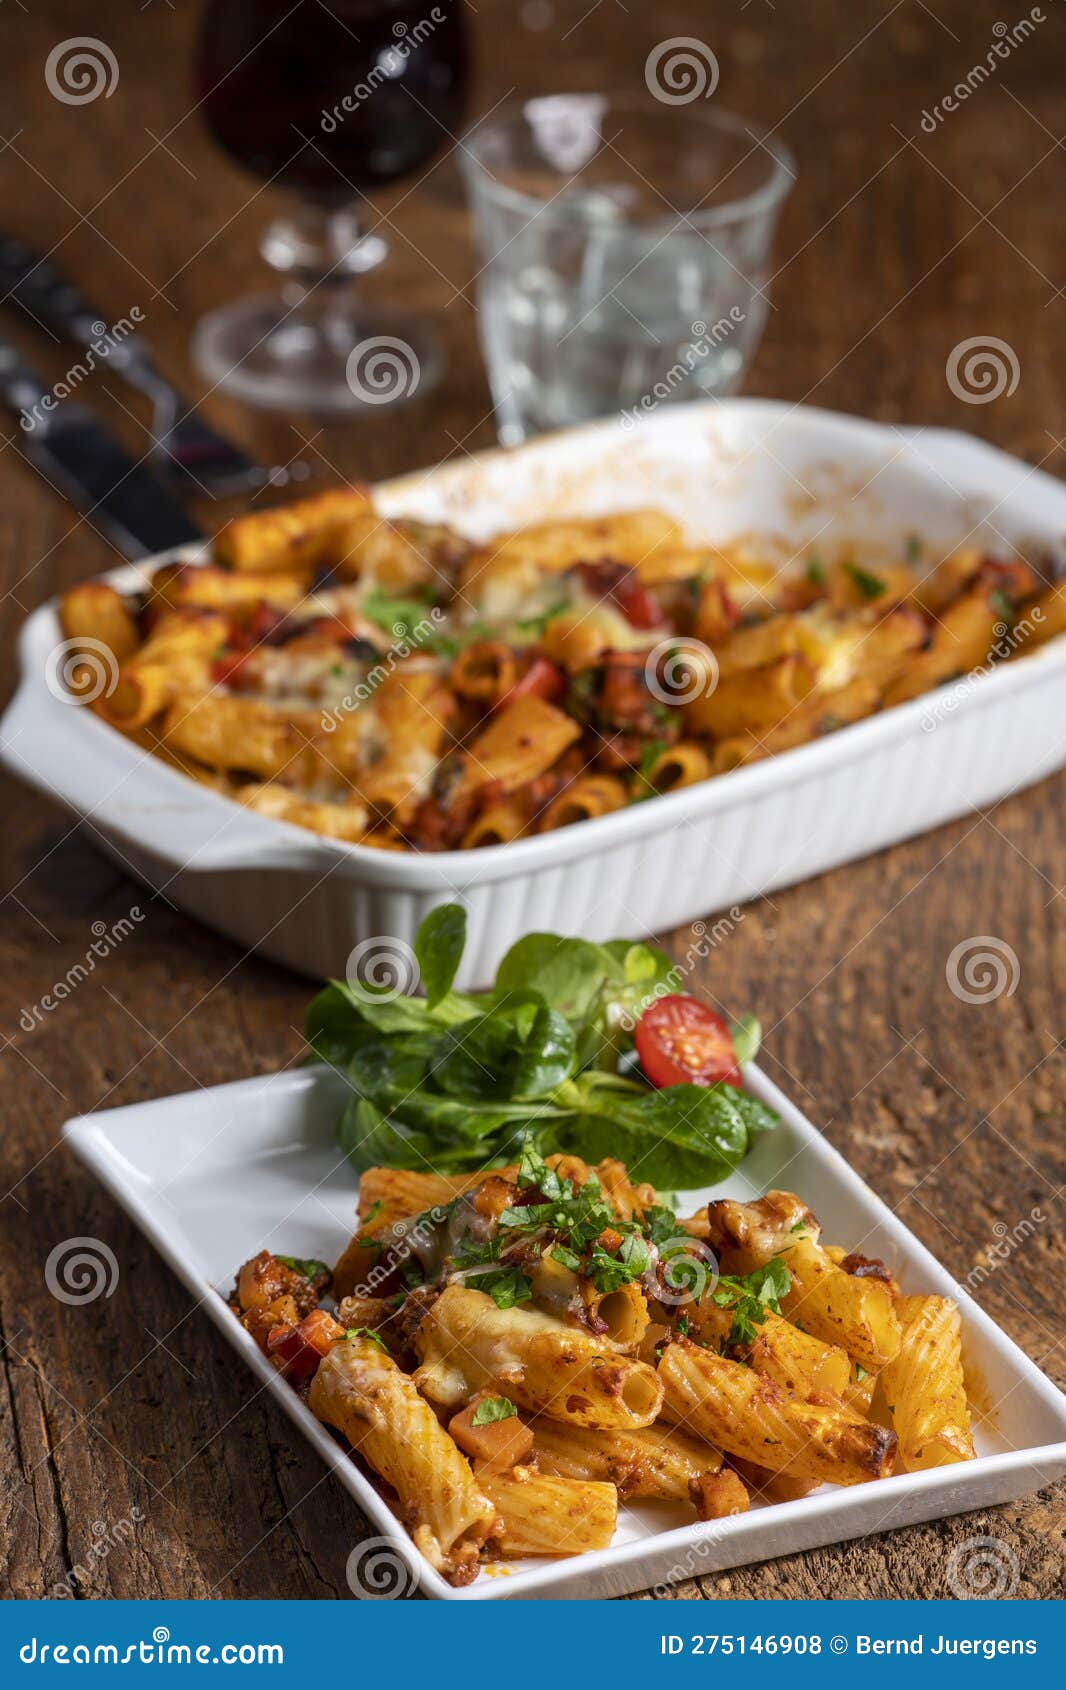 gratinated rigatoni pasta with sauce bolognaise